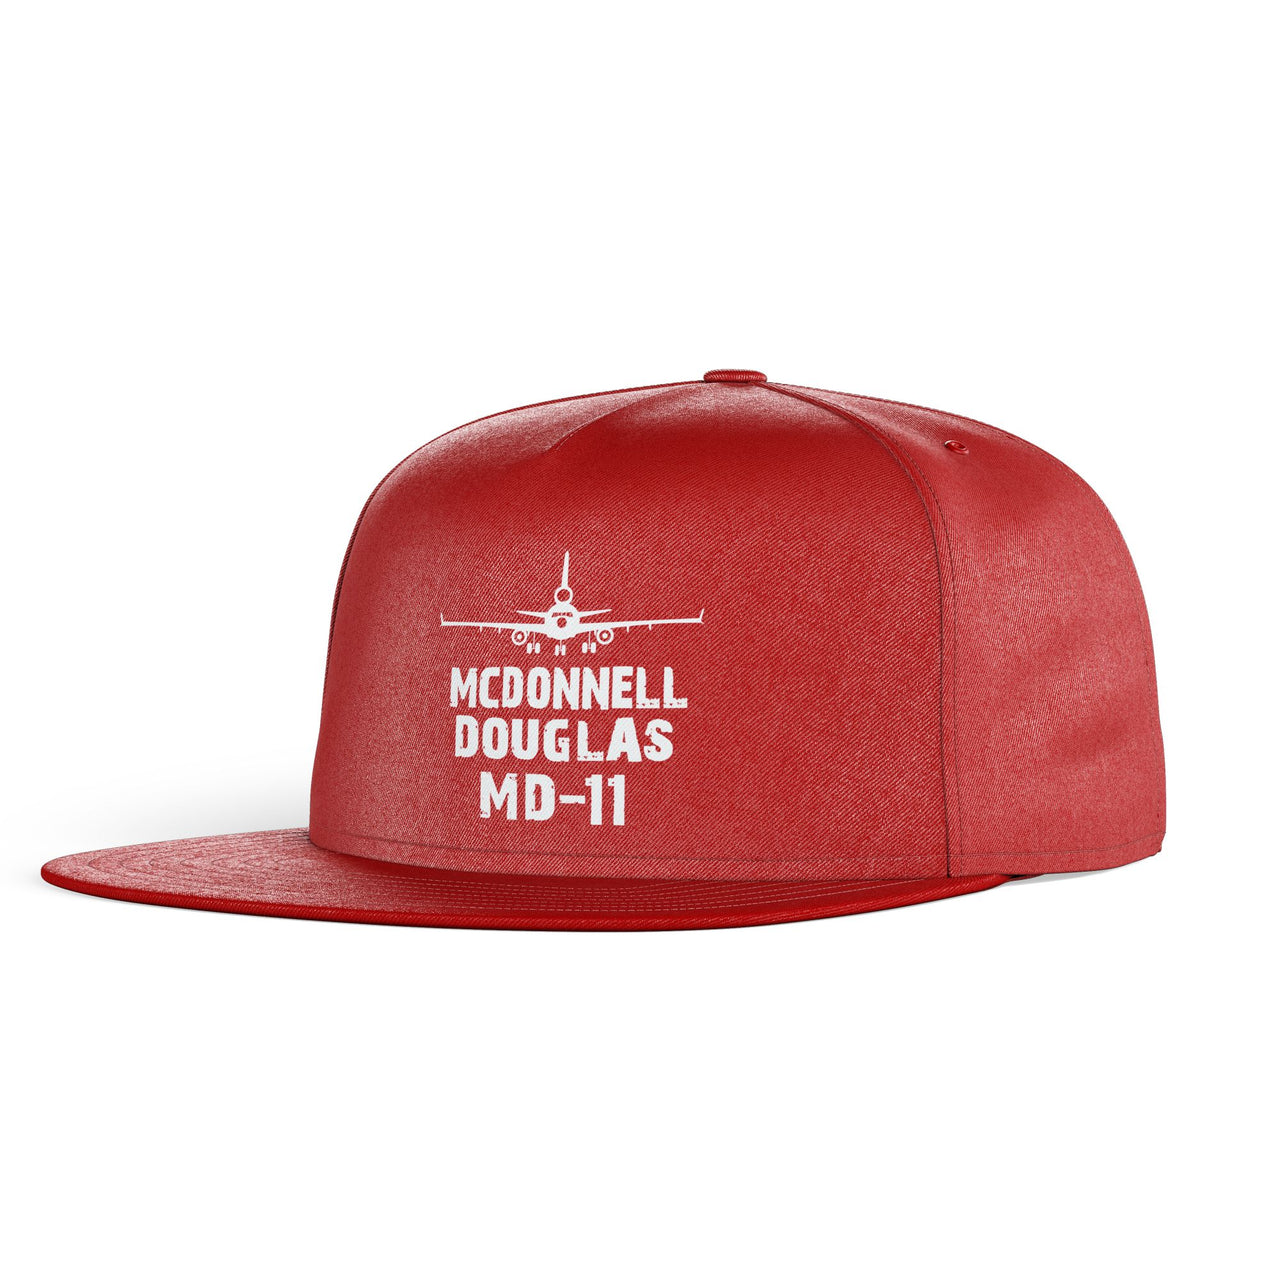 McDonnell Douglas MD-11 & Plane Designed Snapback Caps & Hats